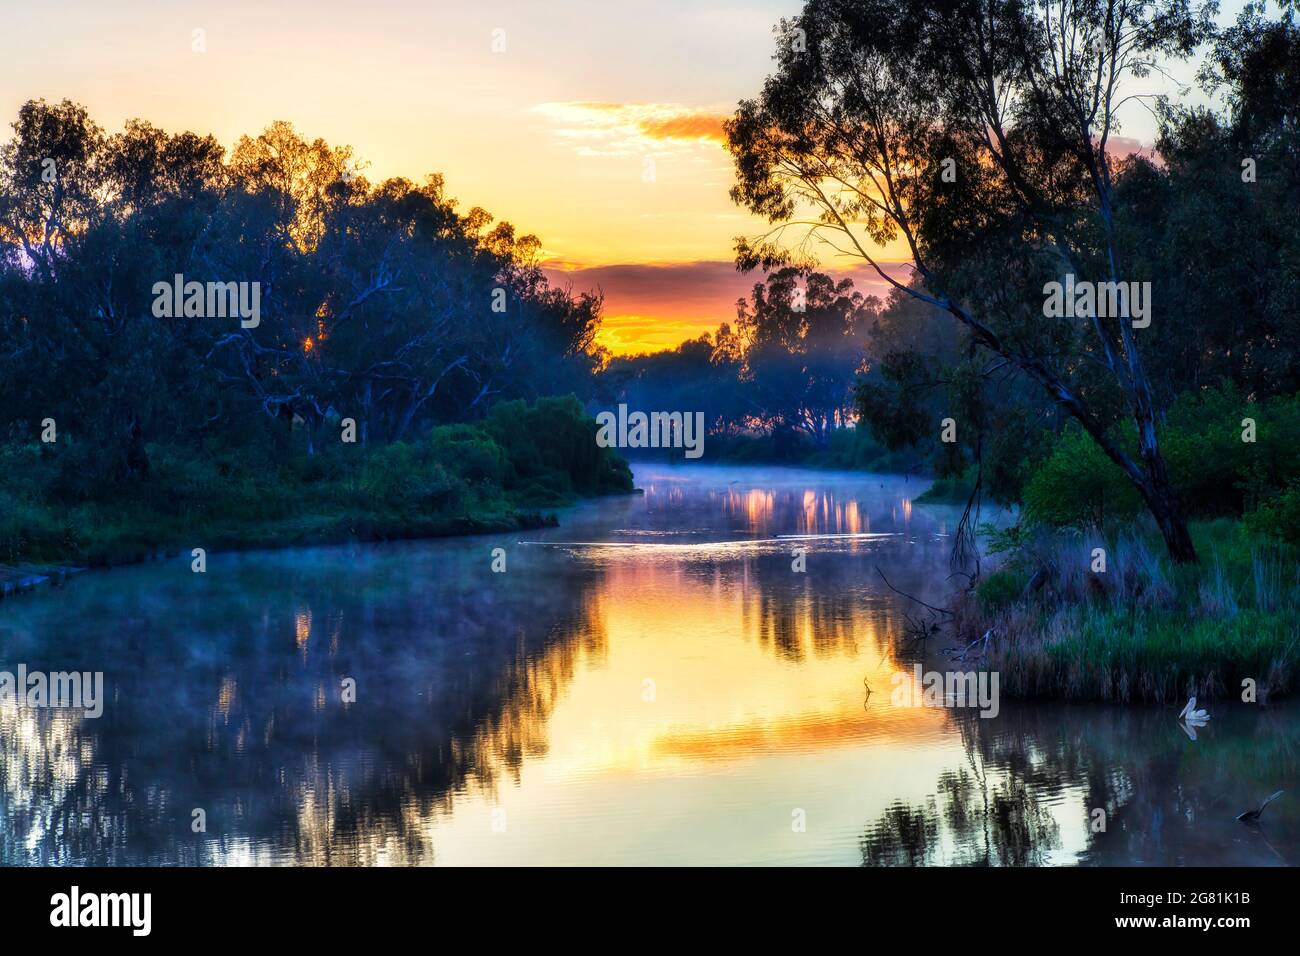 water birds on Macquarie river in Dubbo town of Australian Great Western Plains - scenic sunrise landscape. Stock Photo